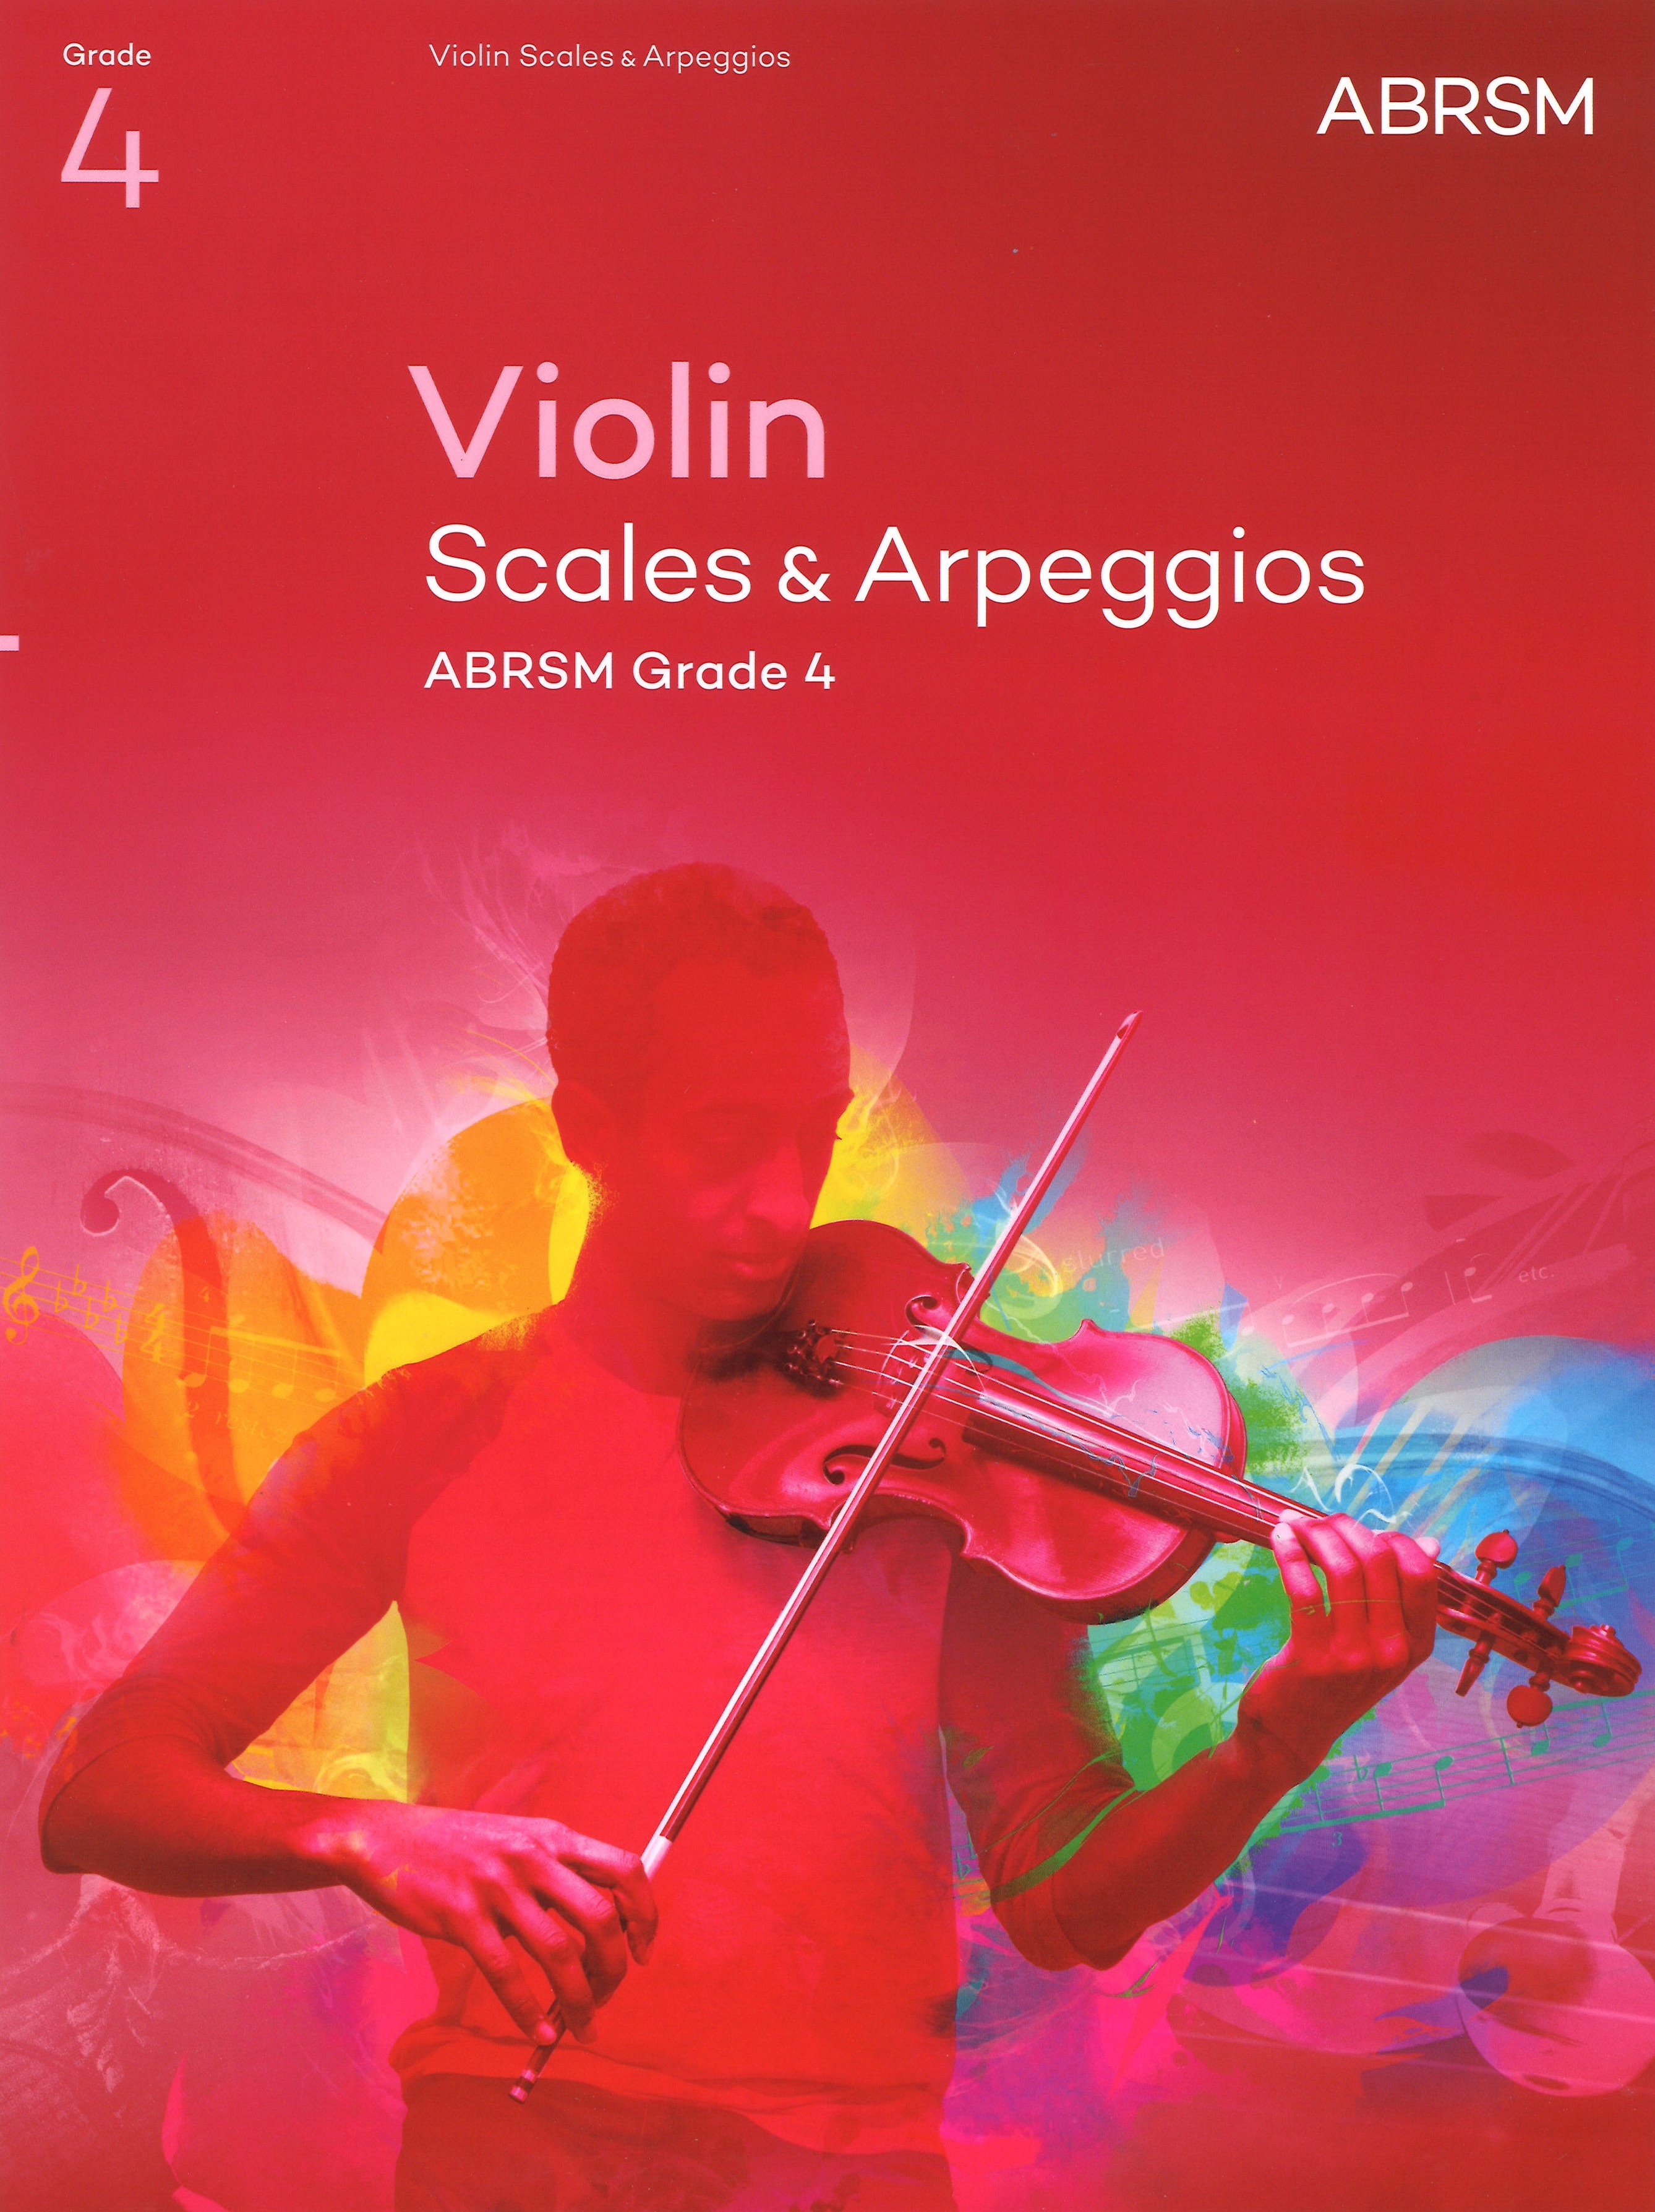 Violin Scales & Arpeggios Grade 4 Abrsm Sheet Music Songbook